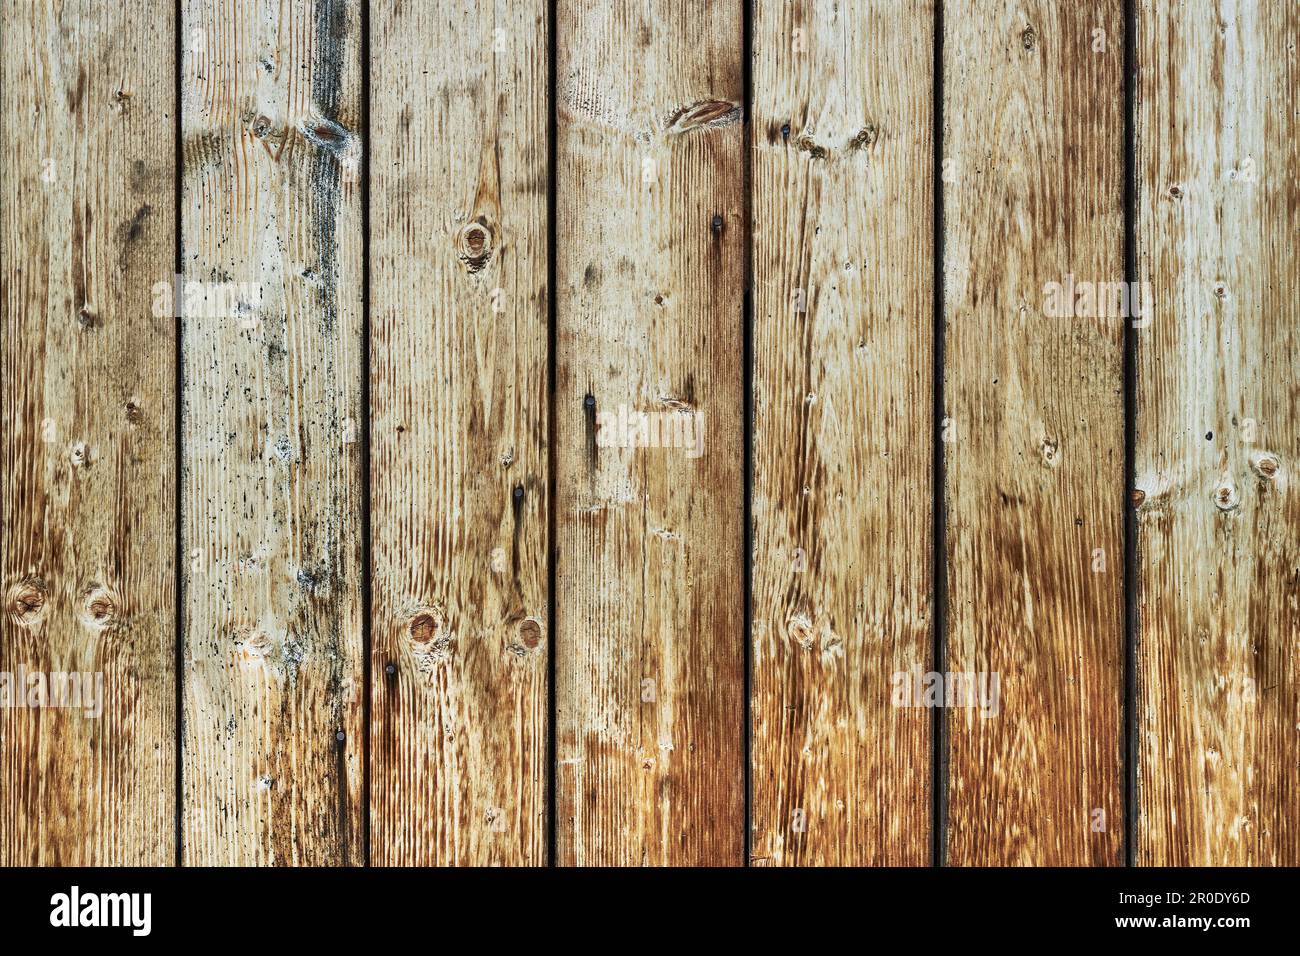 https://c8.alamy.com/compes/2r0dy6d/viejo-fondo-de-madera-rugosa-rustica-antigua-pared-de-la-casa-telon-de-fondo-vintage-tablones-de-madera-fondo-de-textura-de-madera-superficie-antigua-2r0dy6d.jpg